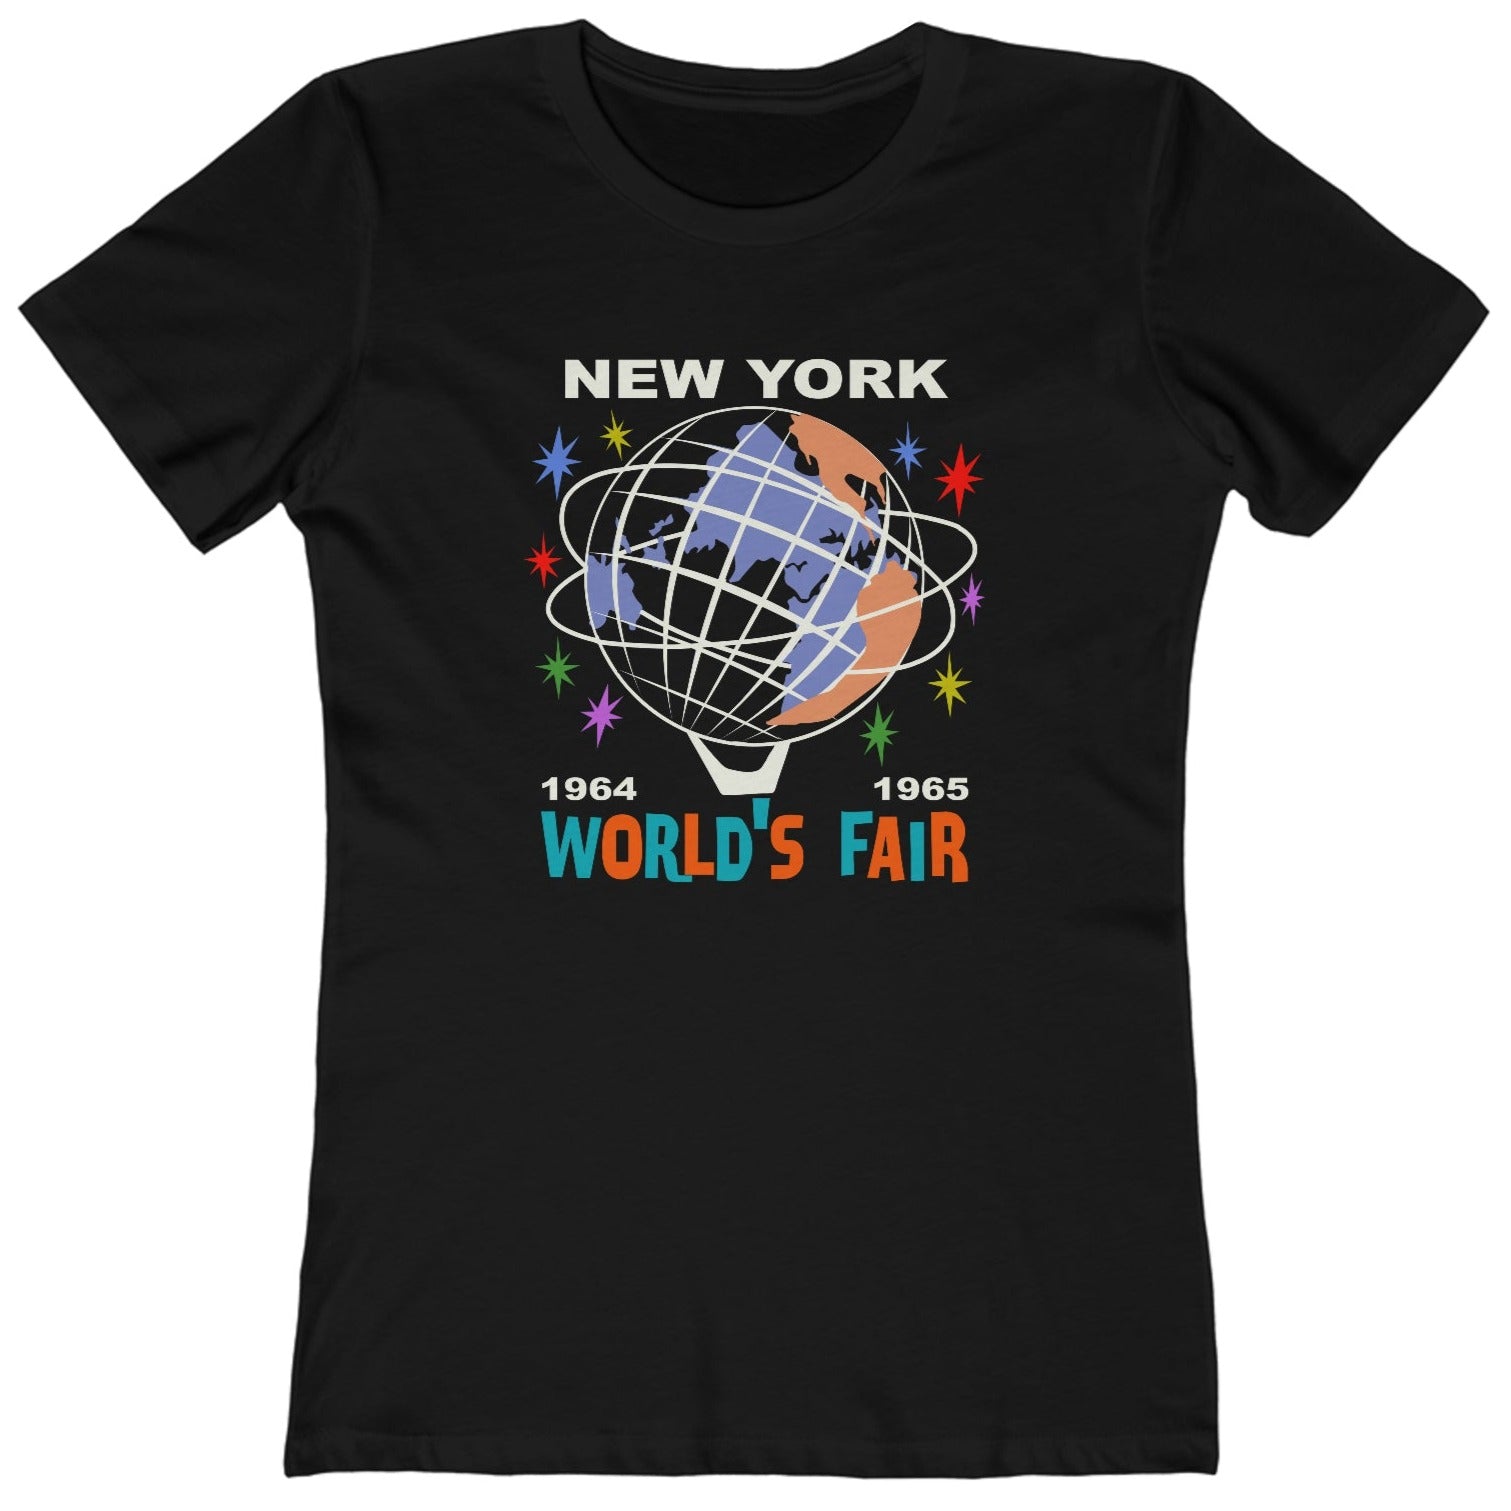 World's fair t-shirt